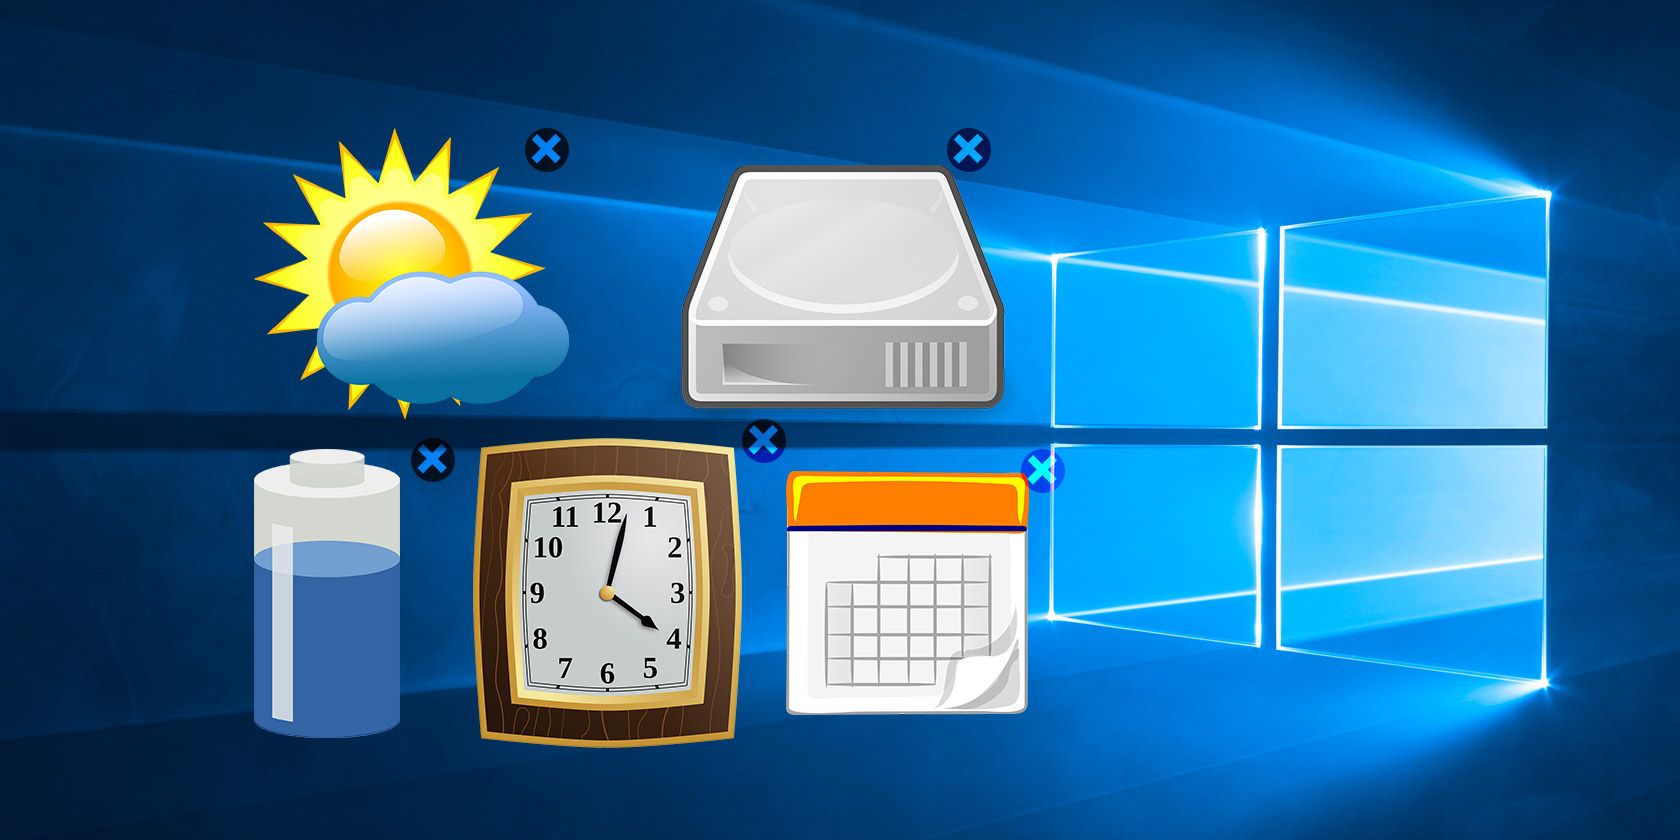 desktop gadgets for windows 10 free download